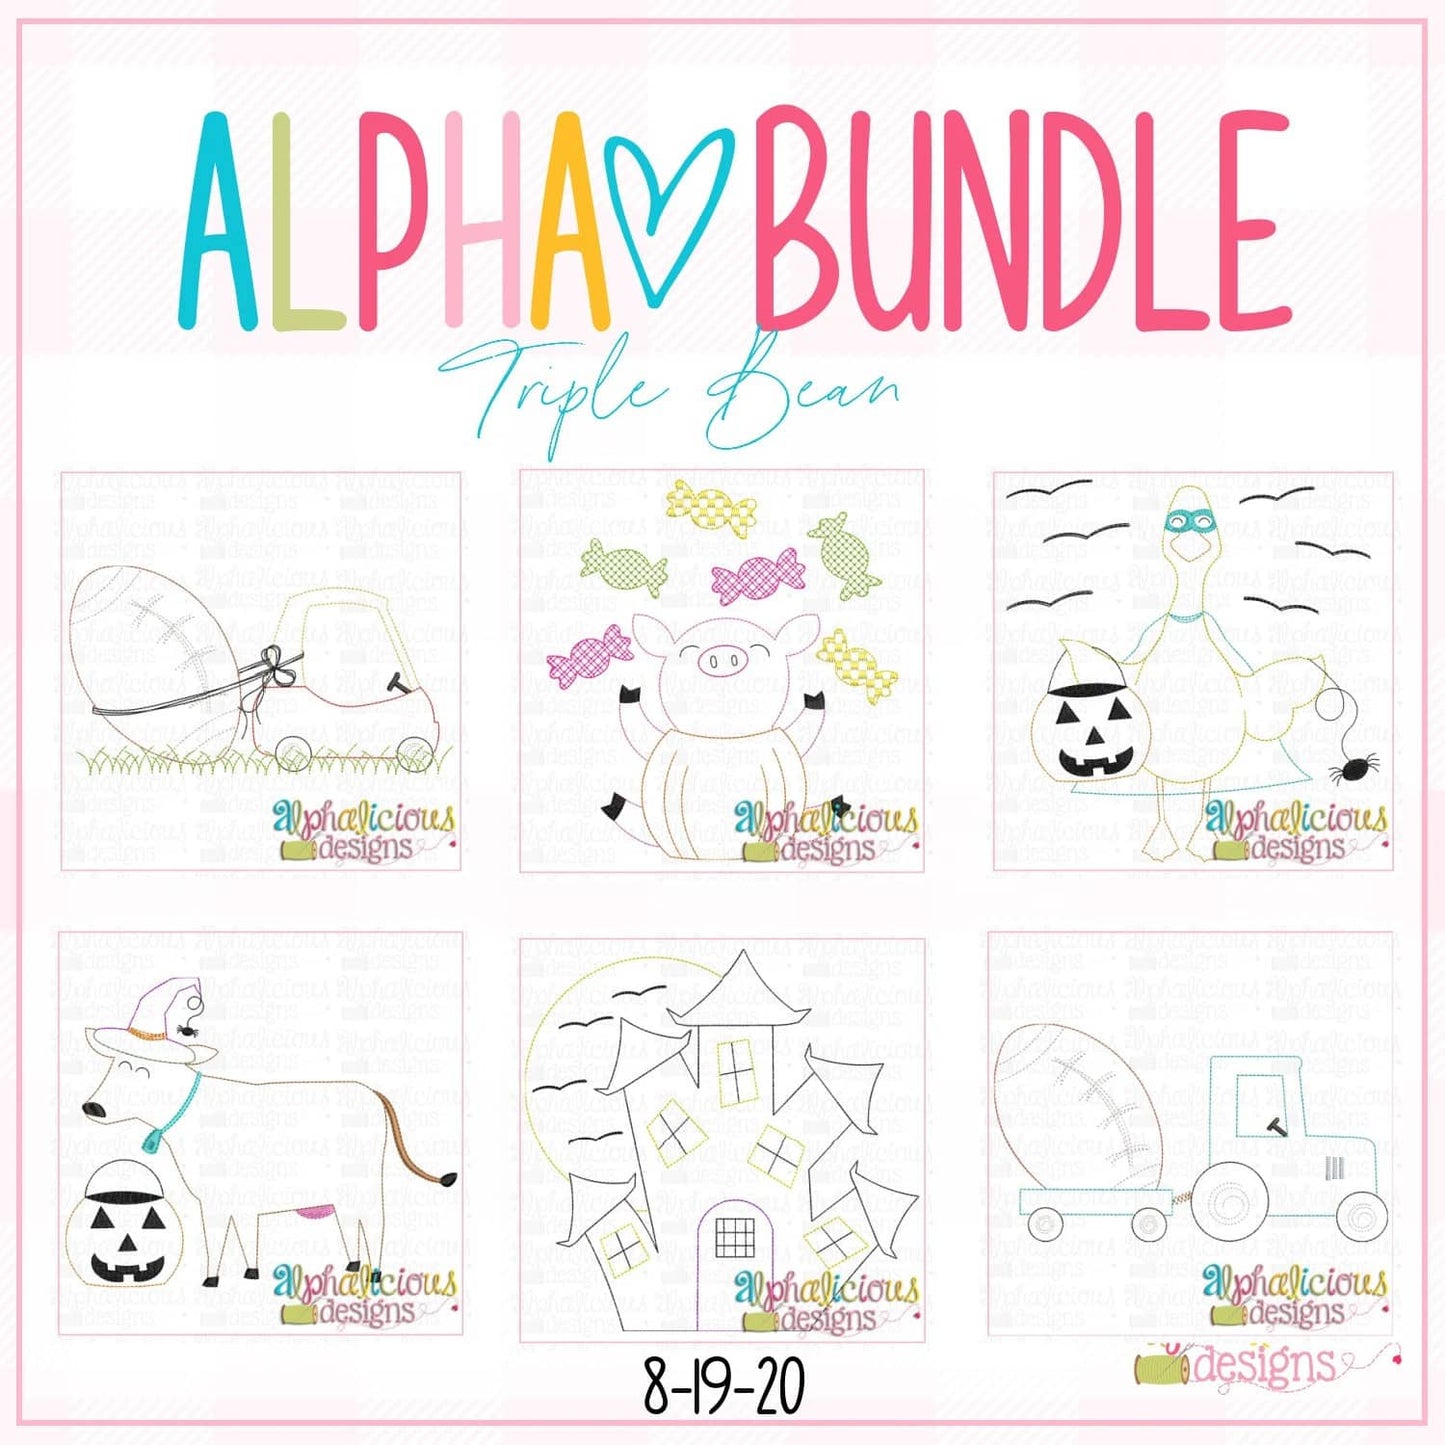 ALPHA BUNDLE-8/19/20 Release-Triple Bean Stitch